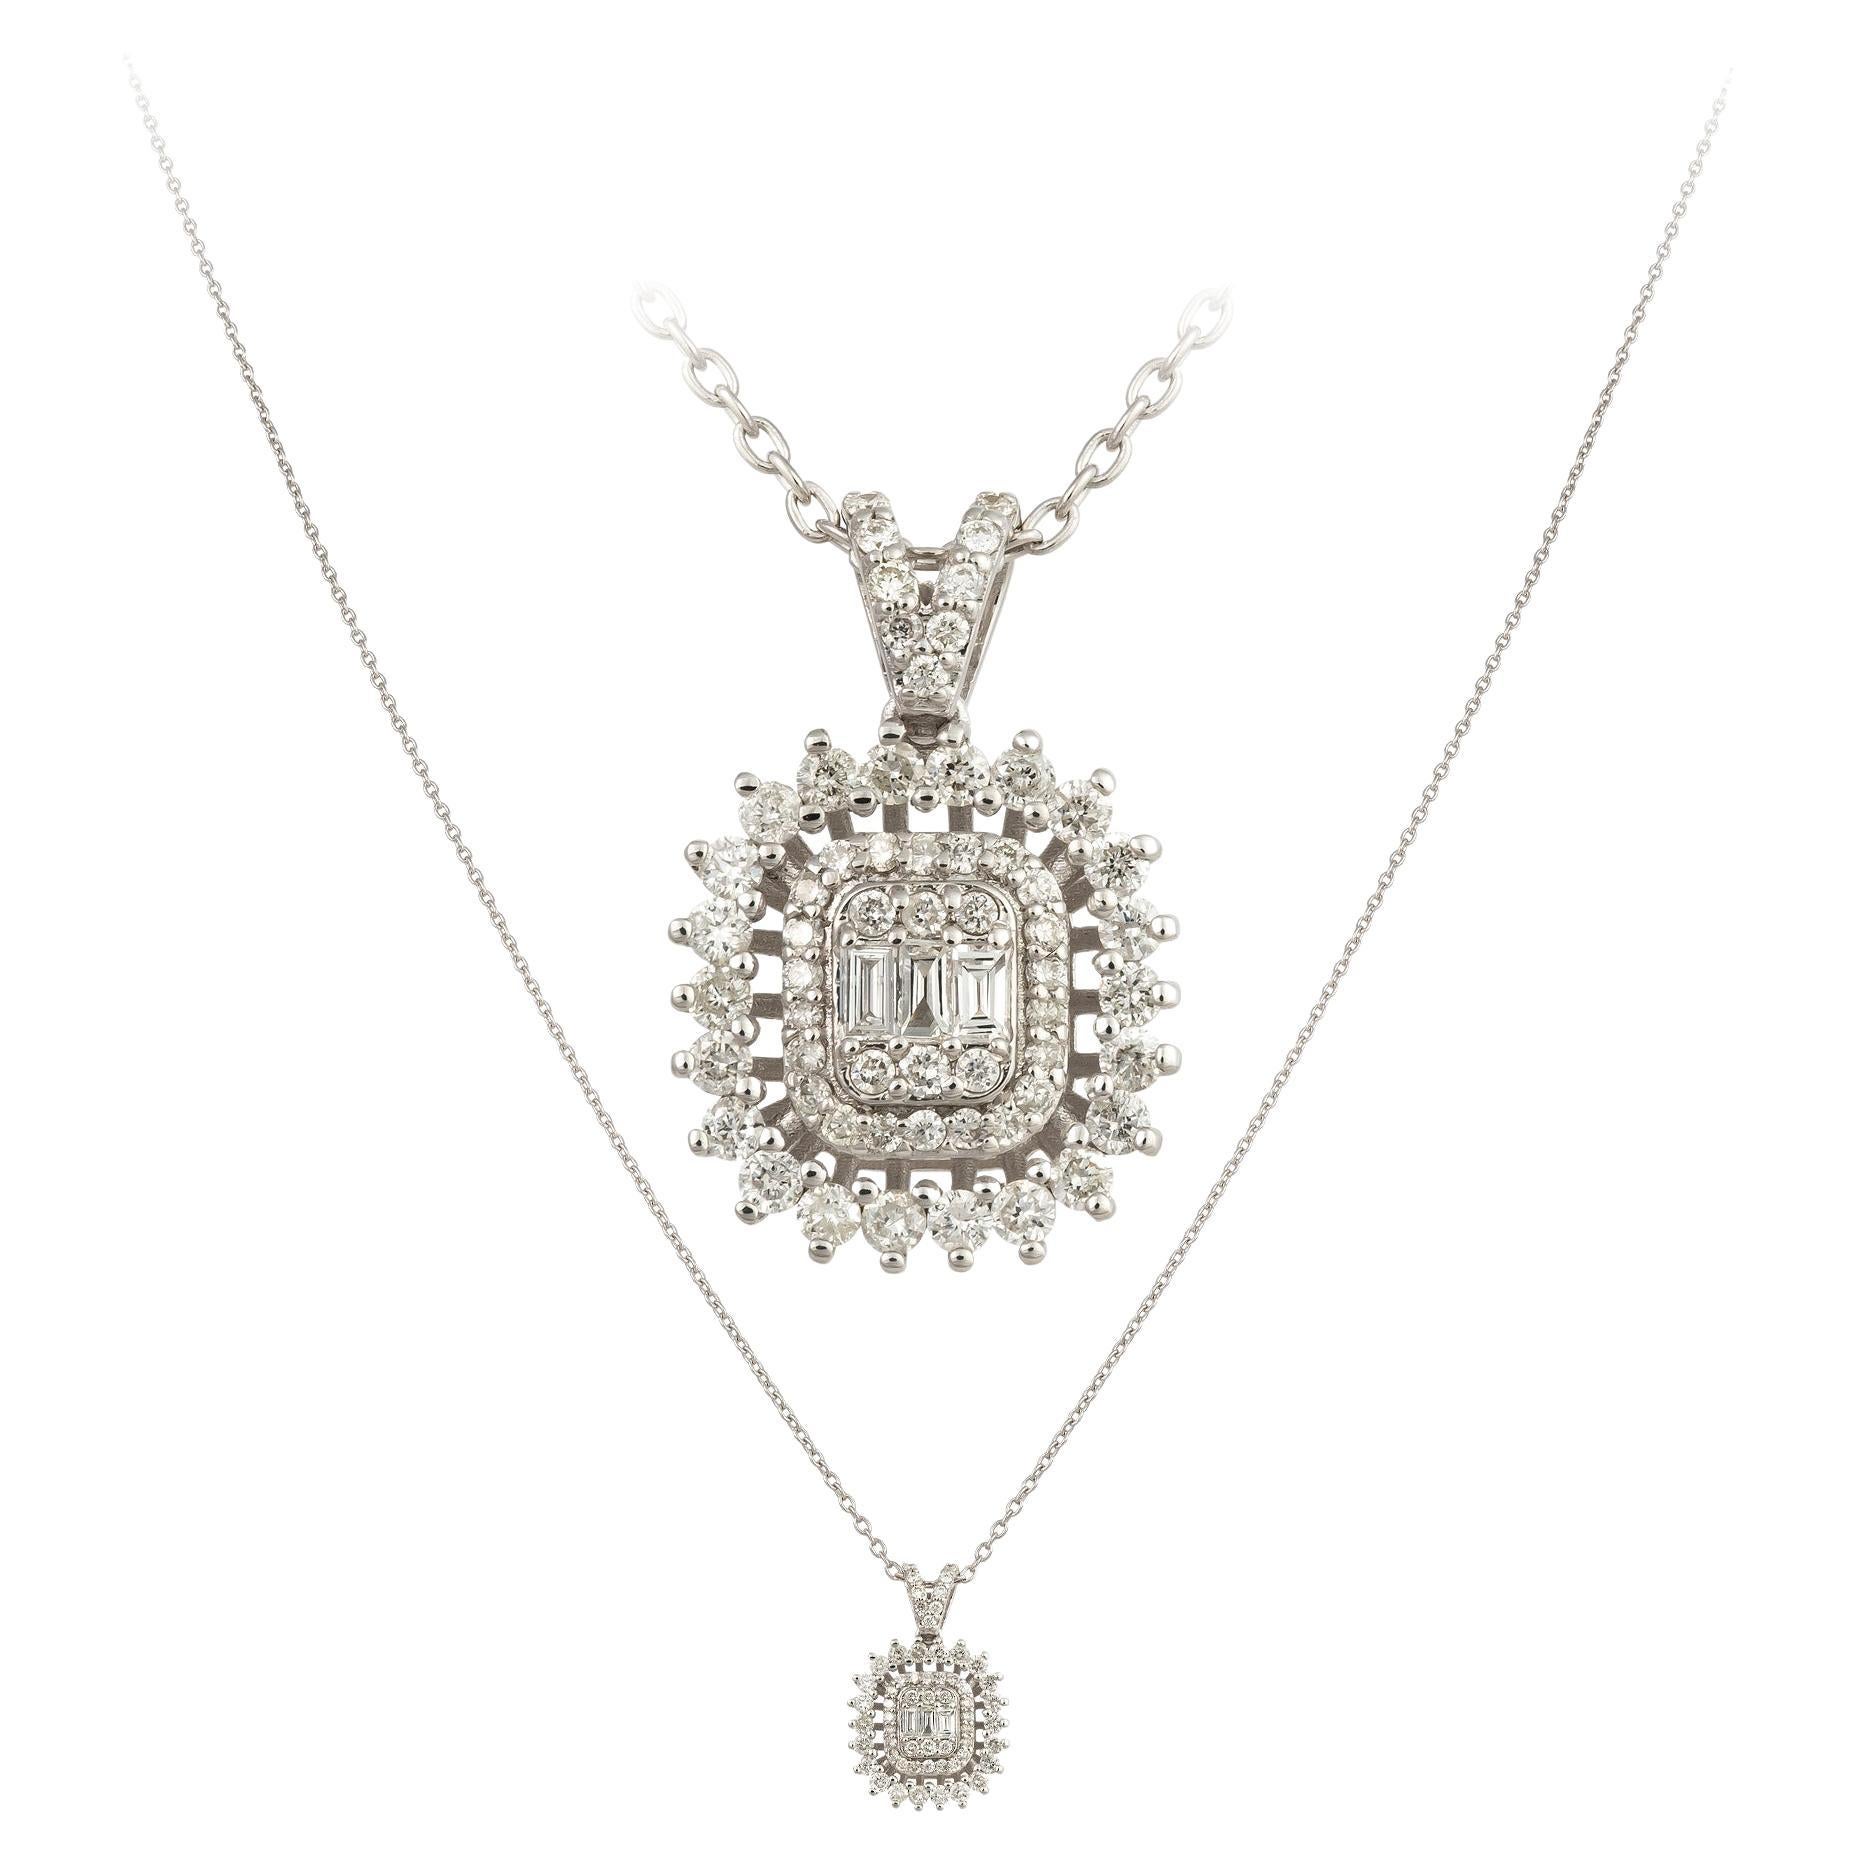 Modern White Gold 18K Necklace Diamond For Her